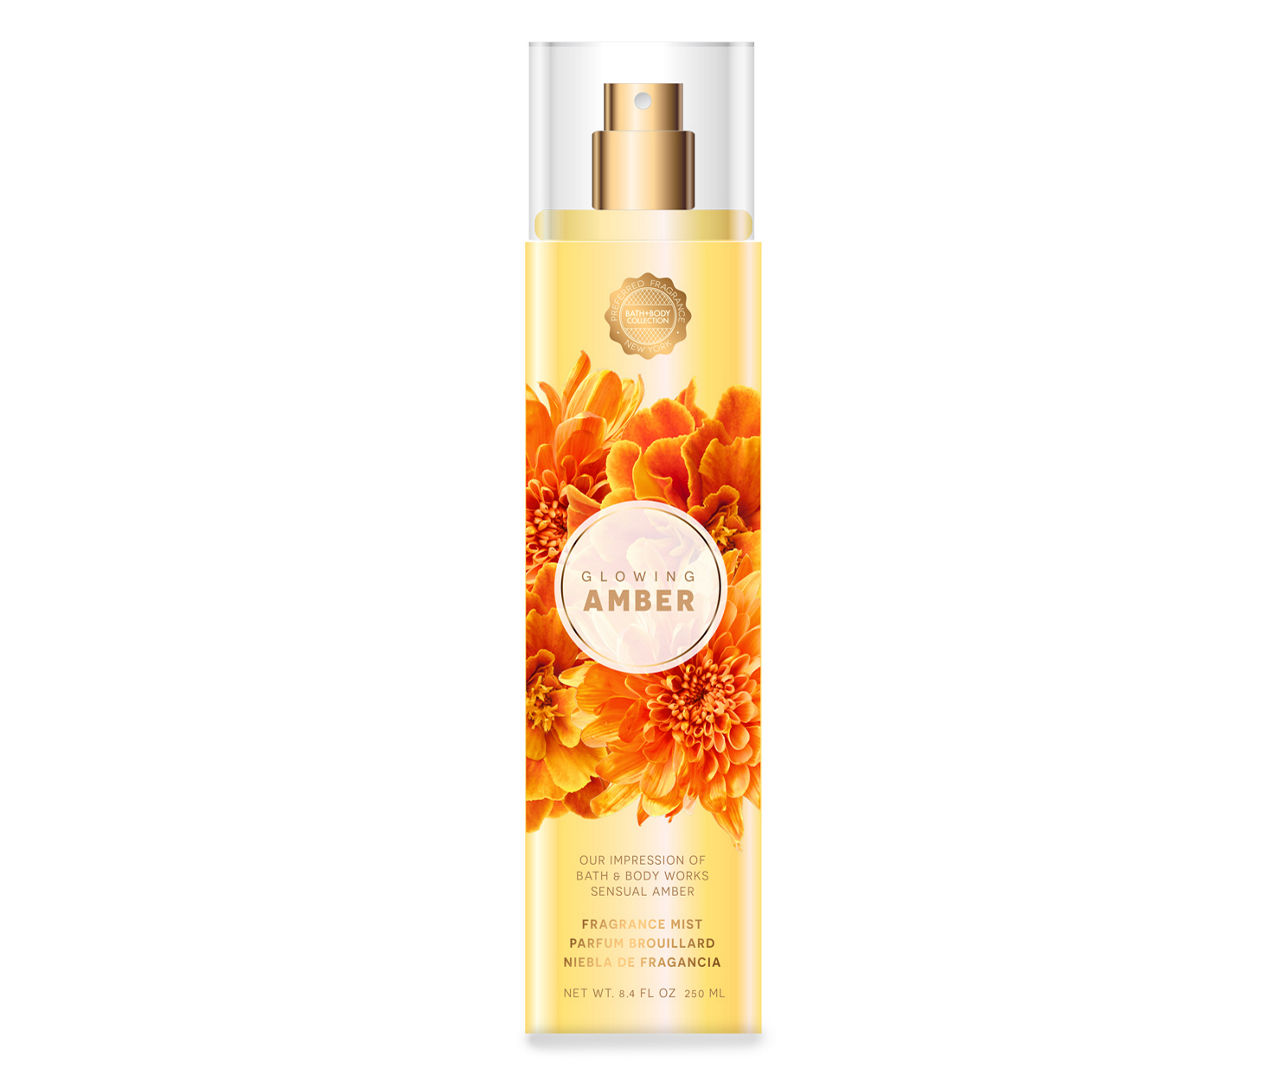 Victoria's Secret Amber Romance Fragrance Mist & Lotion Set 8.4 fl oz & 8  fl oz